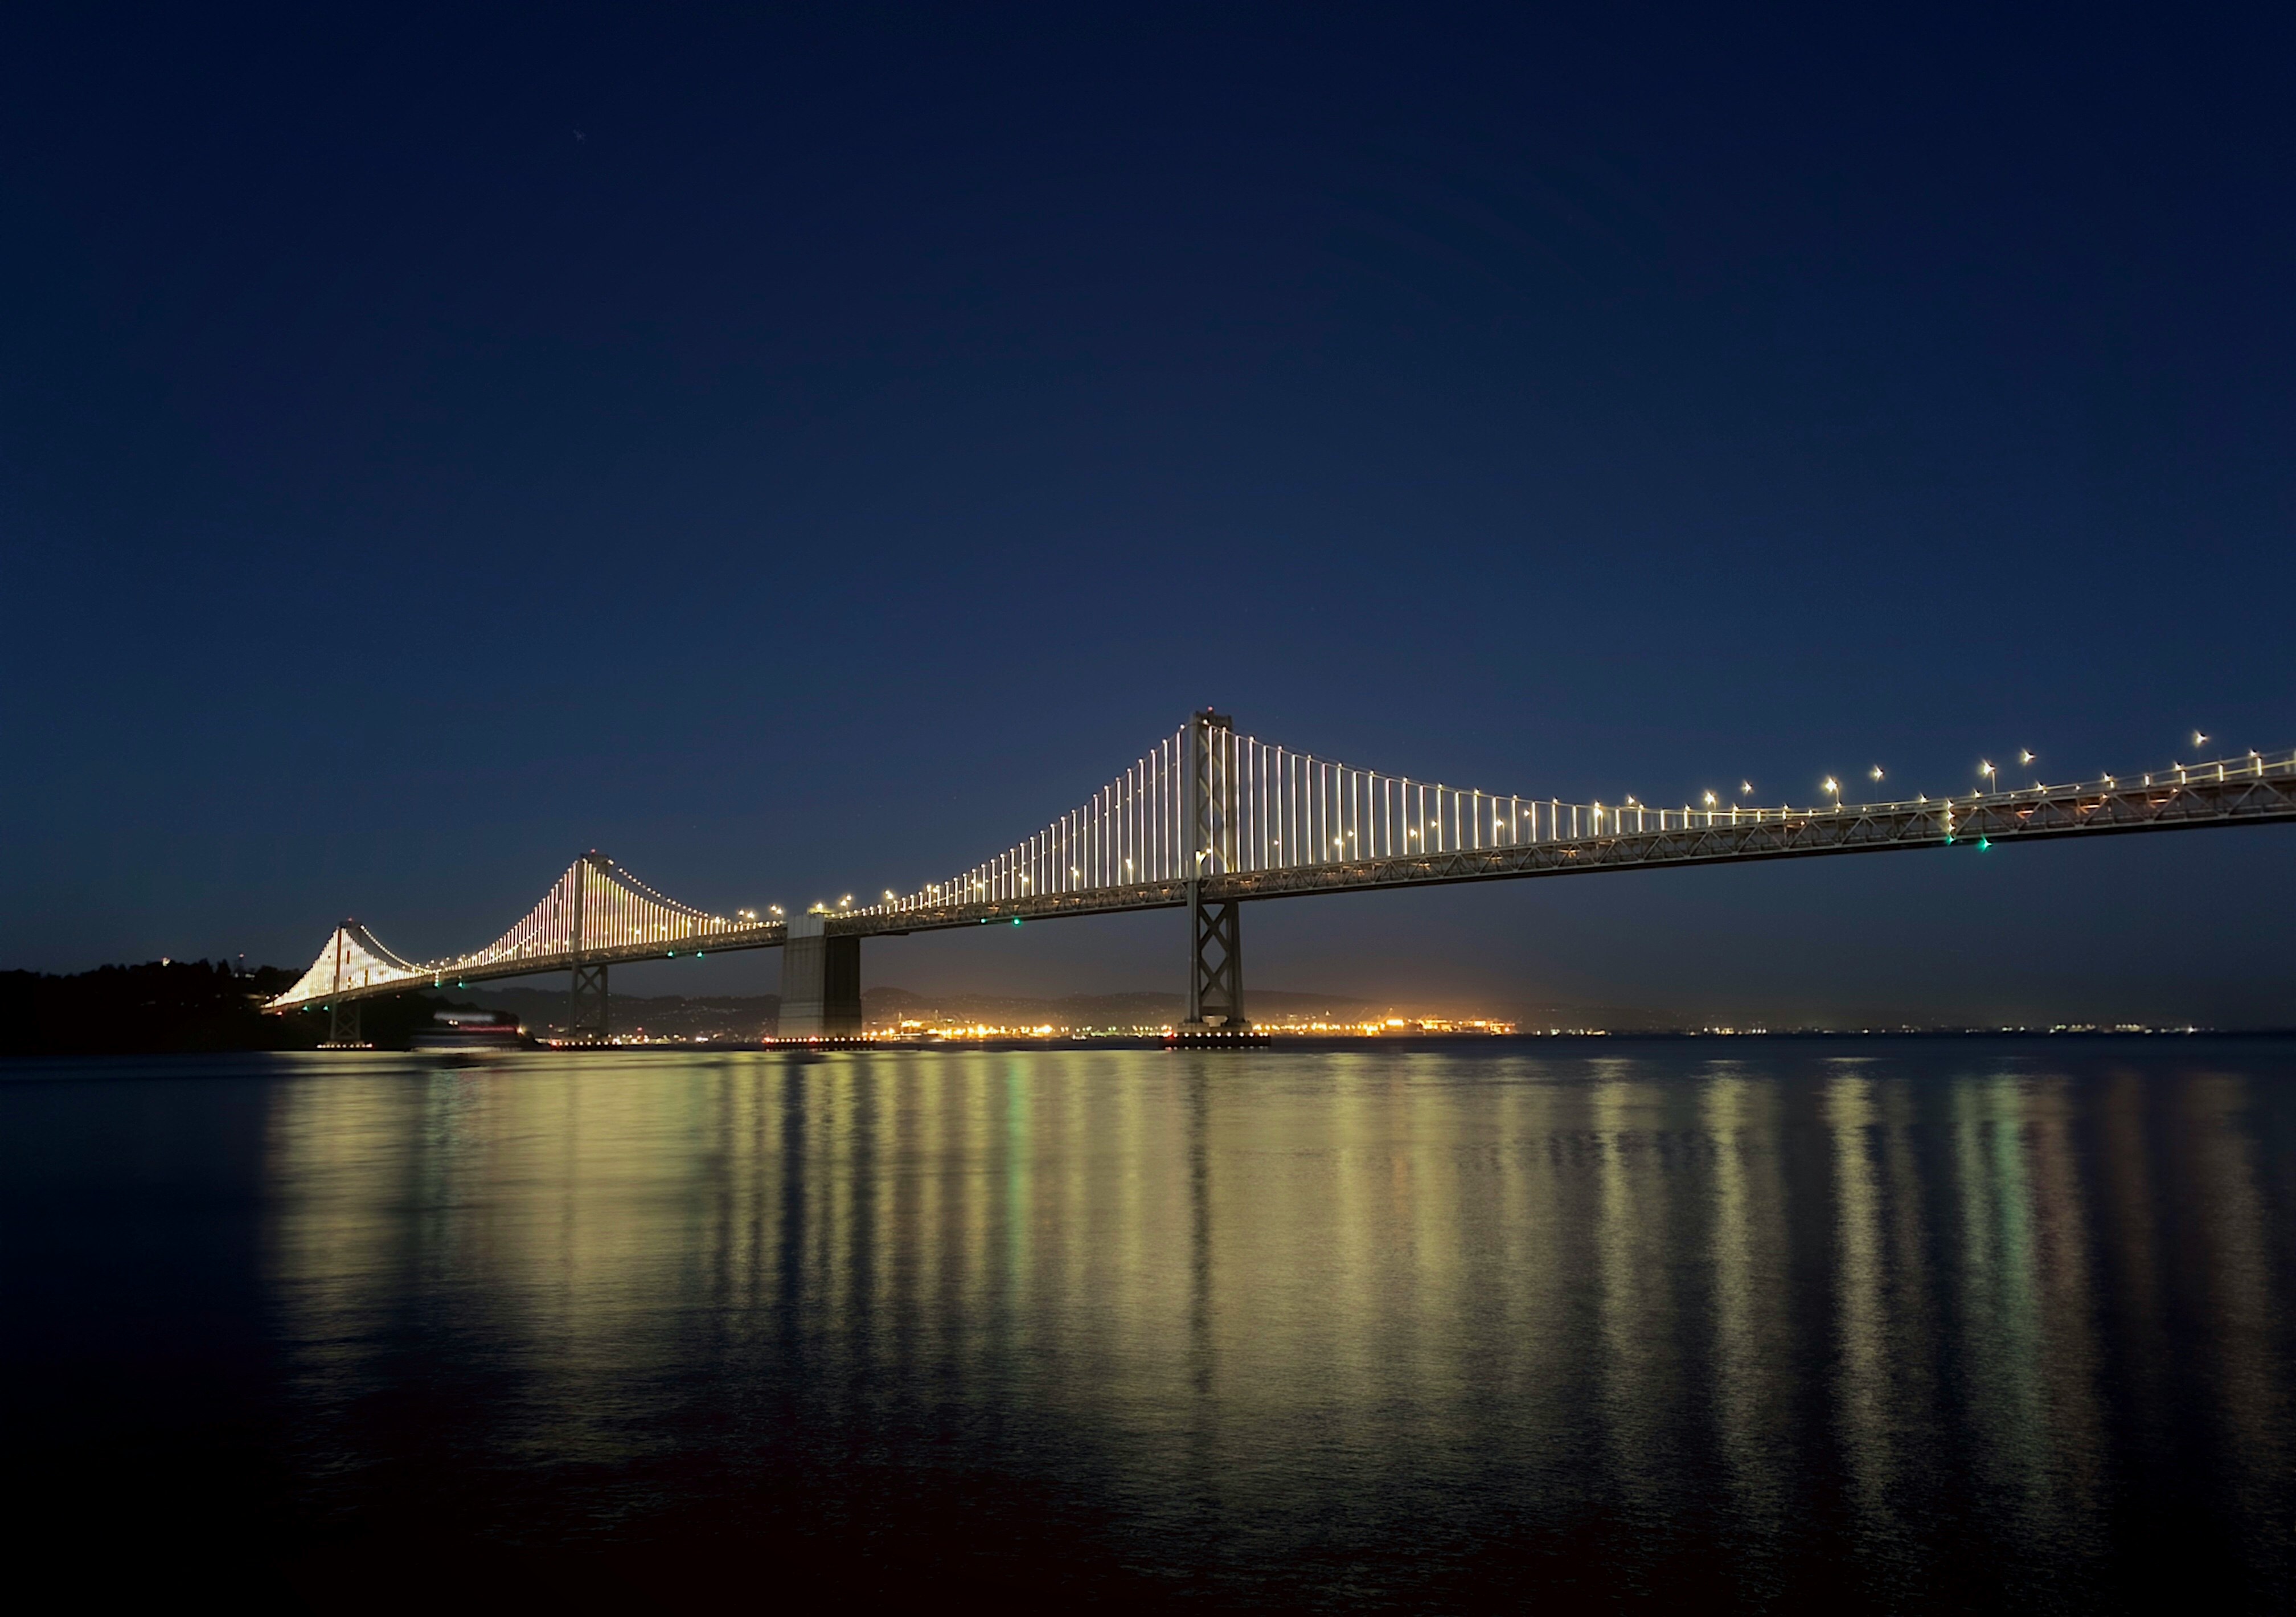 Bay Bridge, lit up at night. Pushing the limits of mobile photography minimizing noise at night.